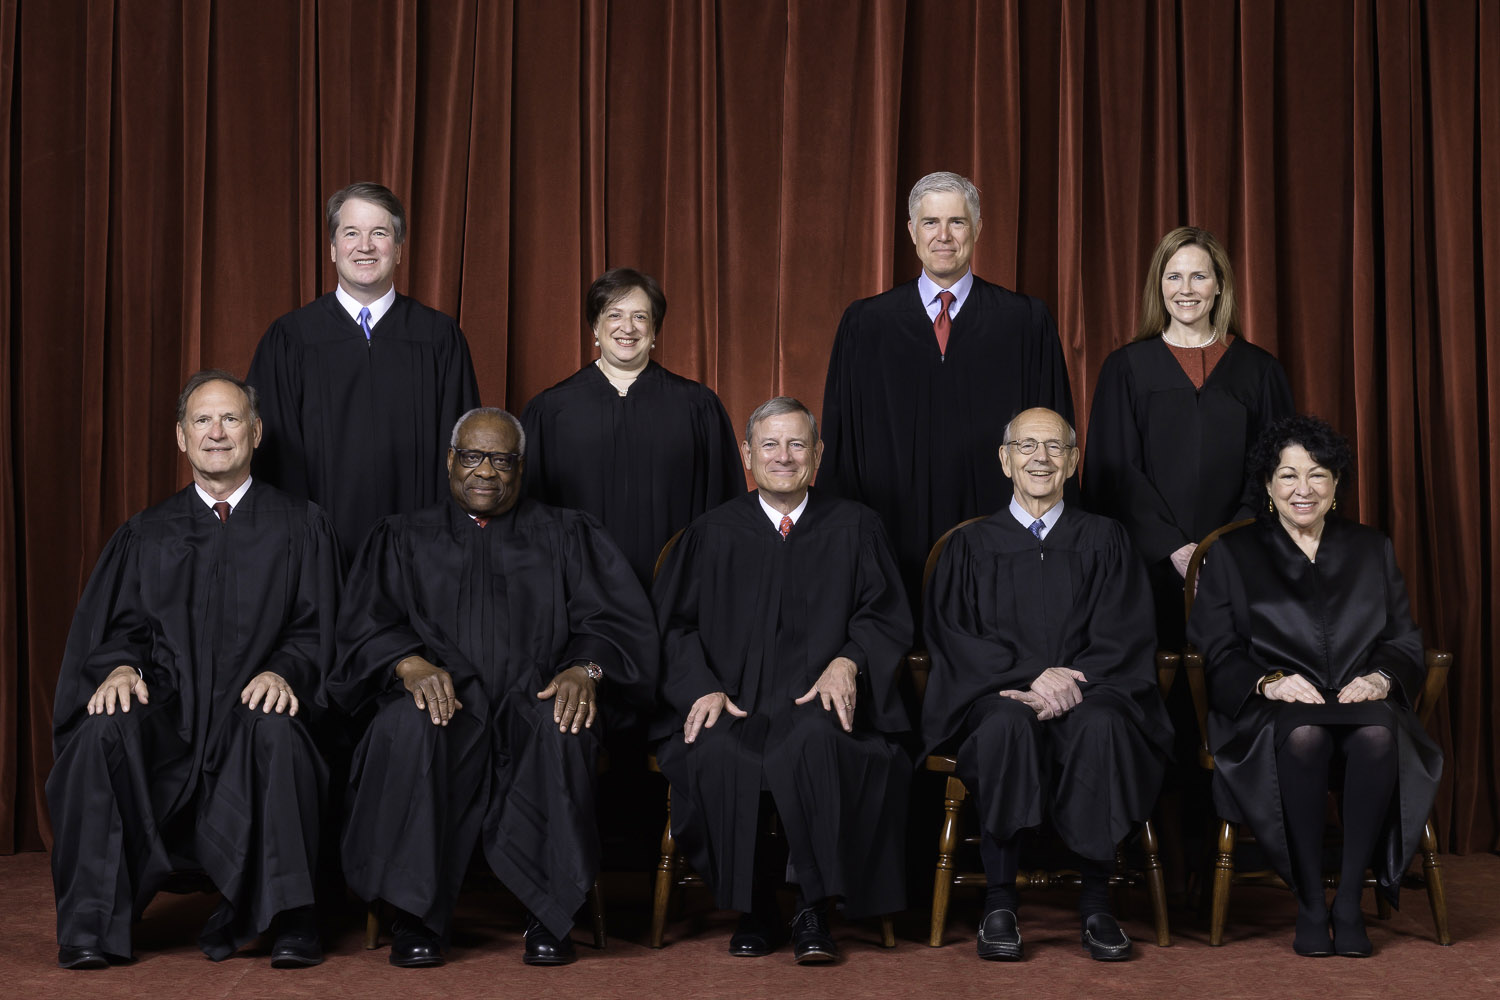 formal portrait of the Supreme Court, 2022